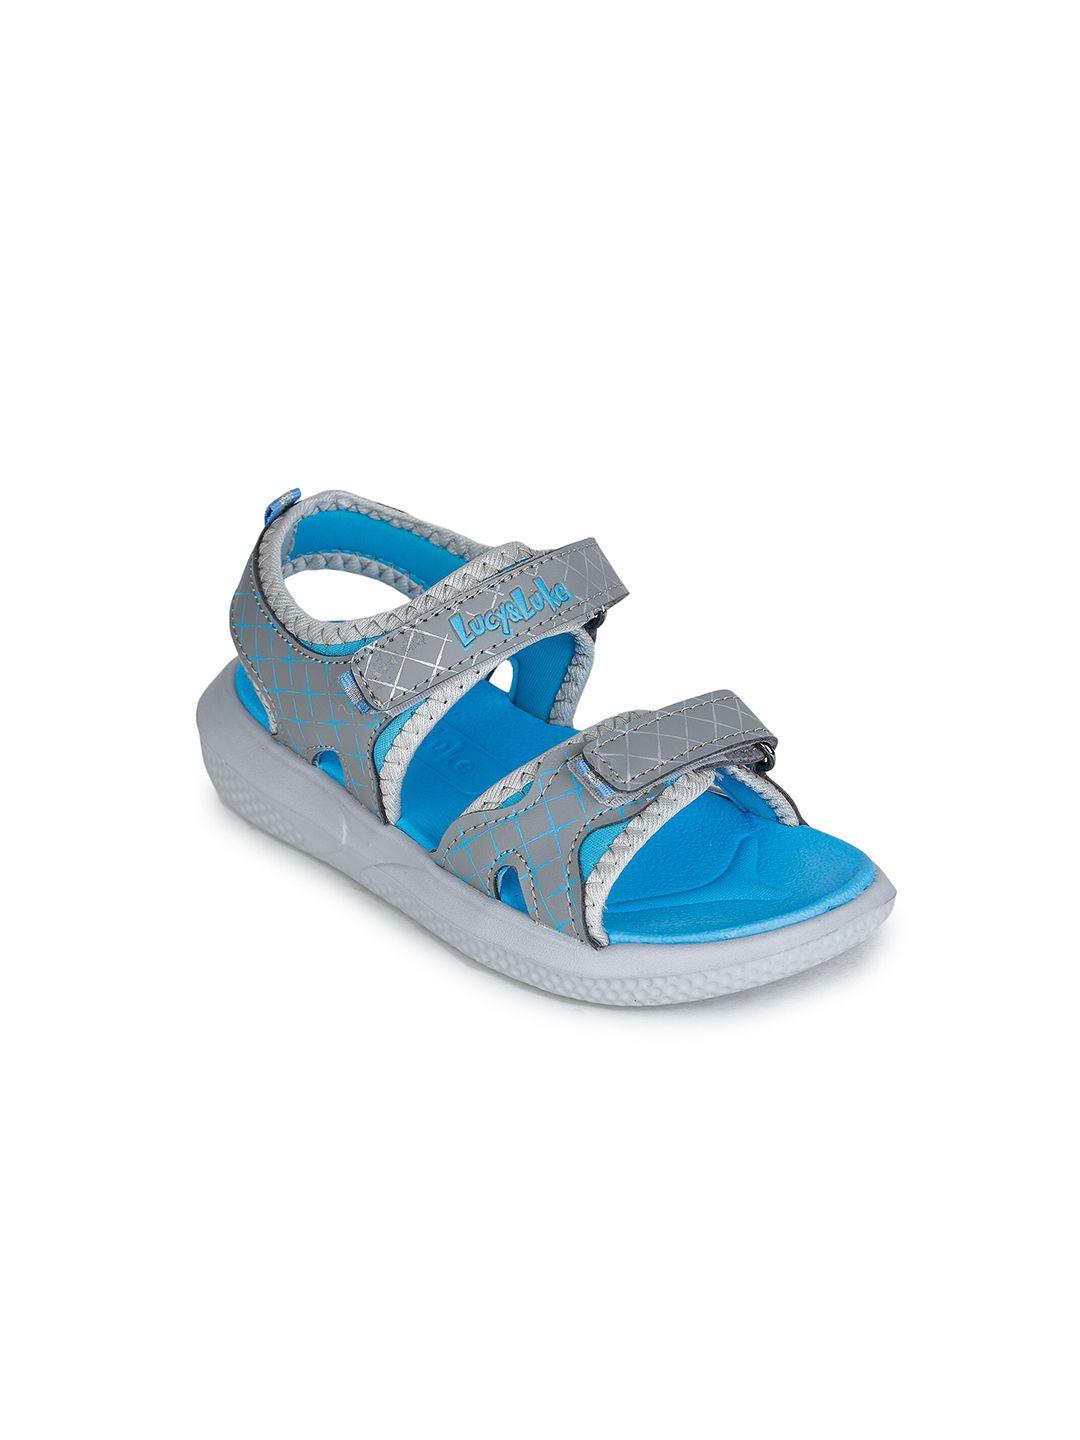 liberty-kids-grey-&-blue-sports-sandals